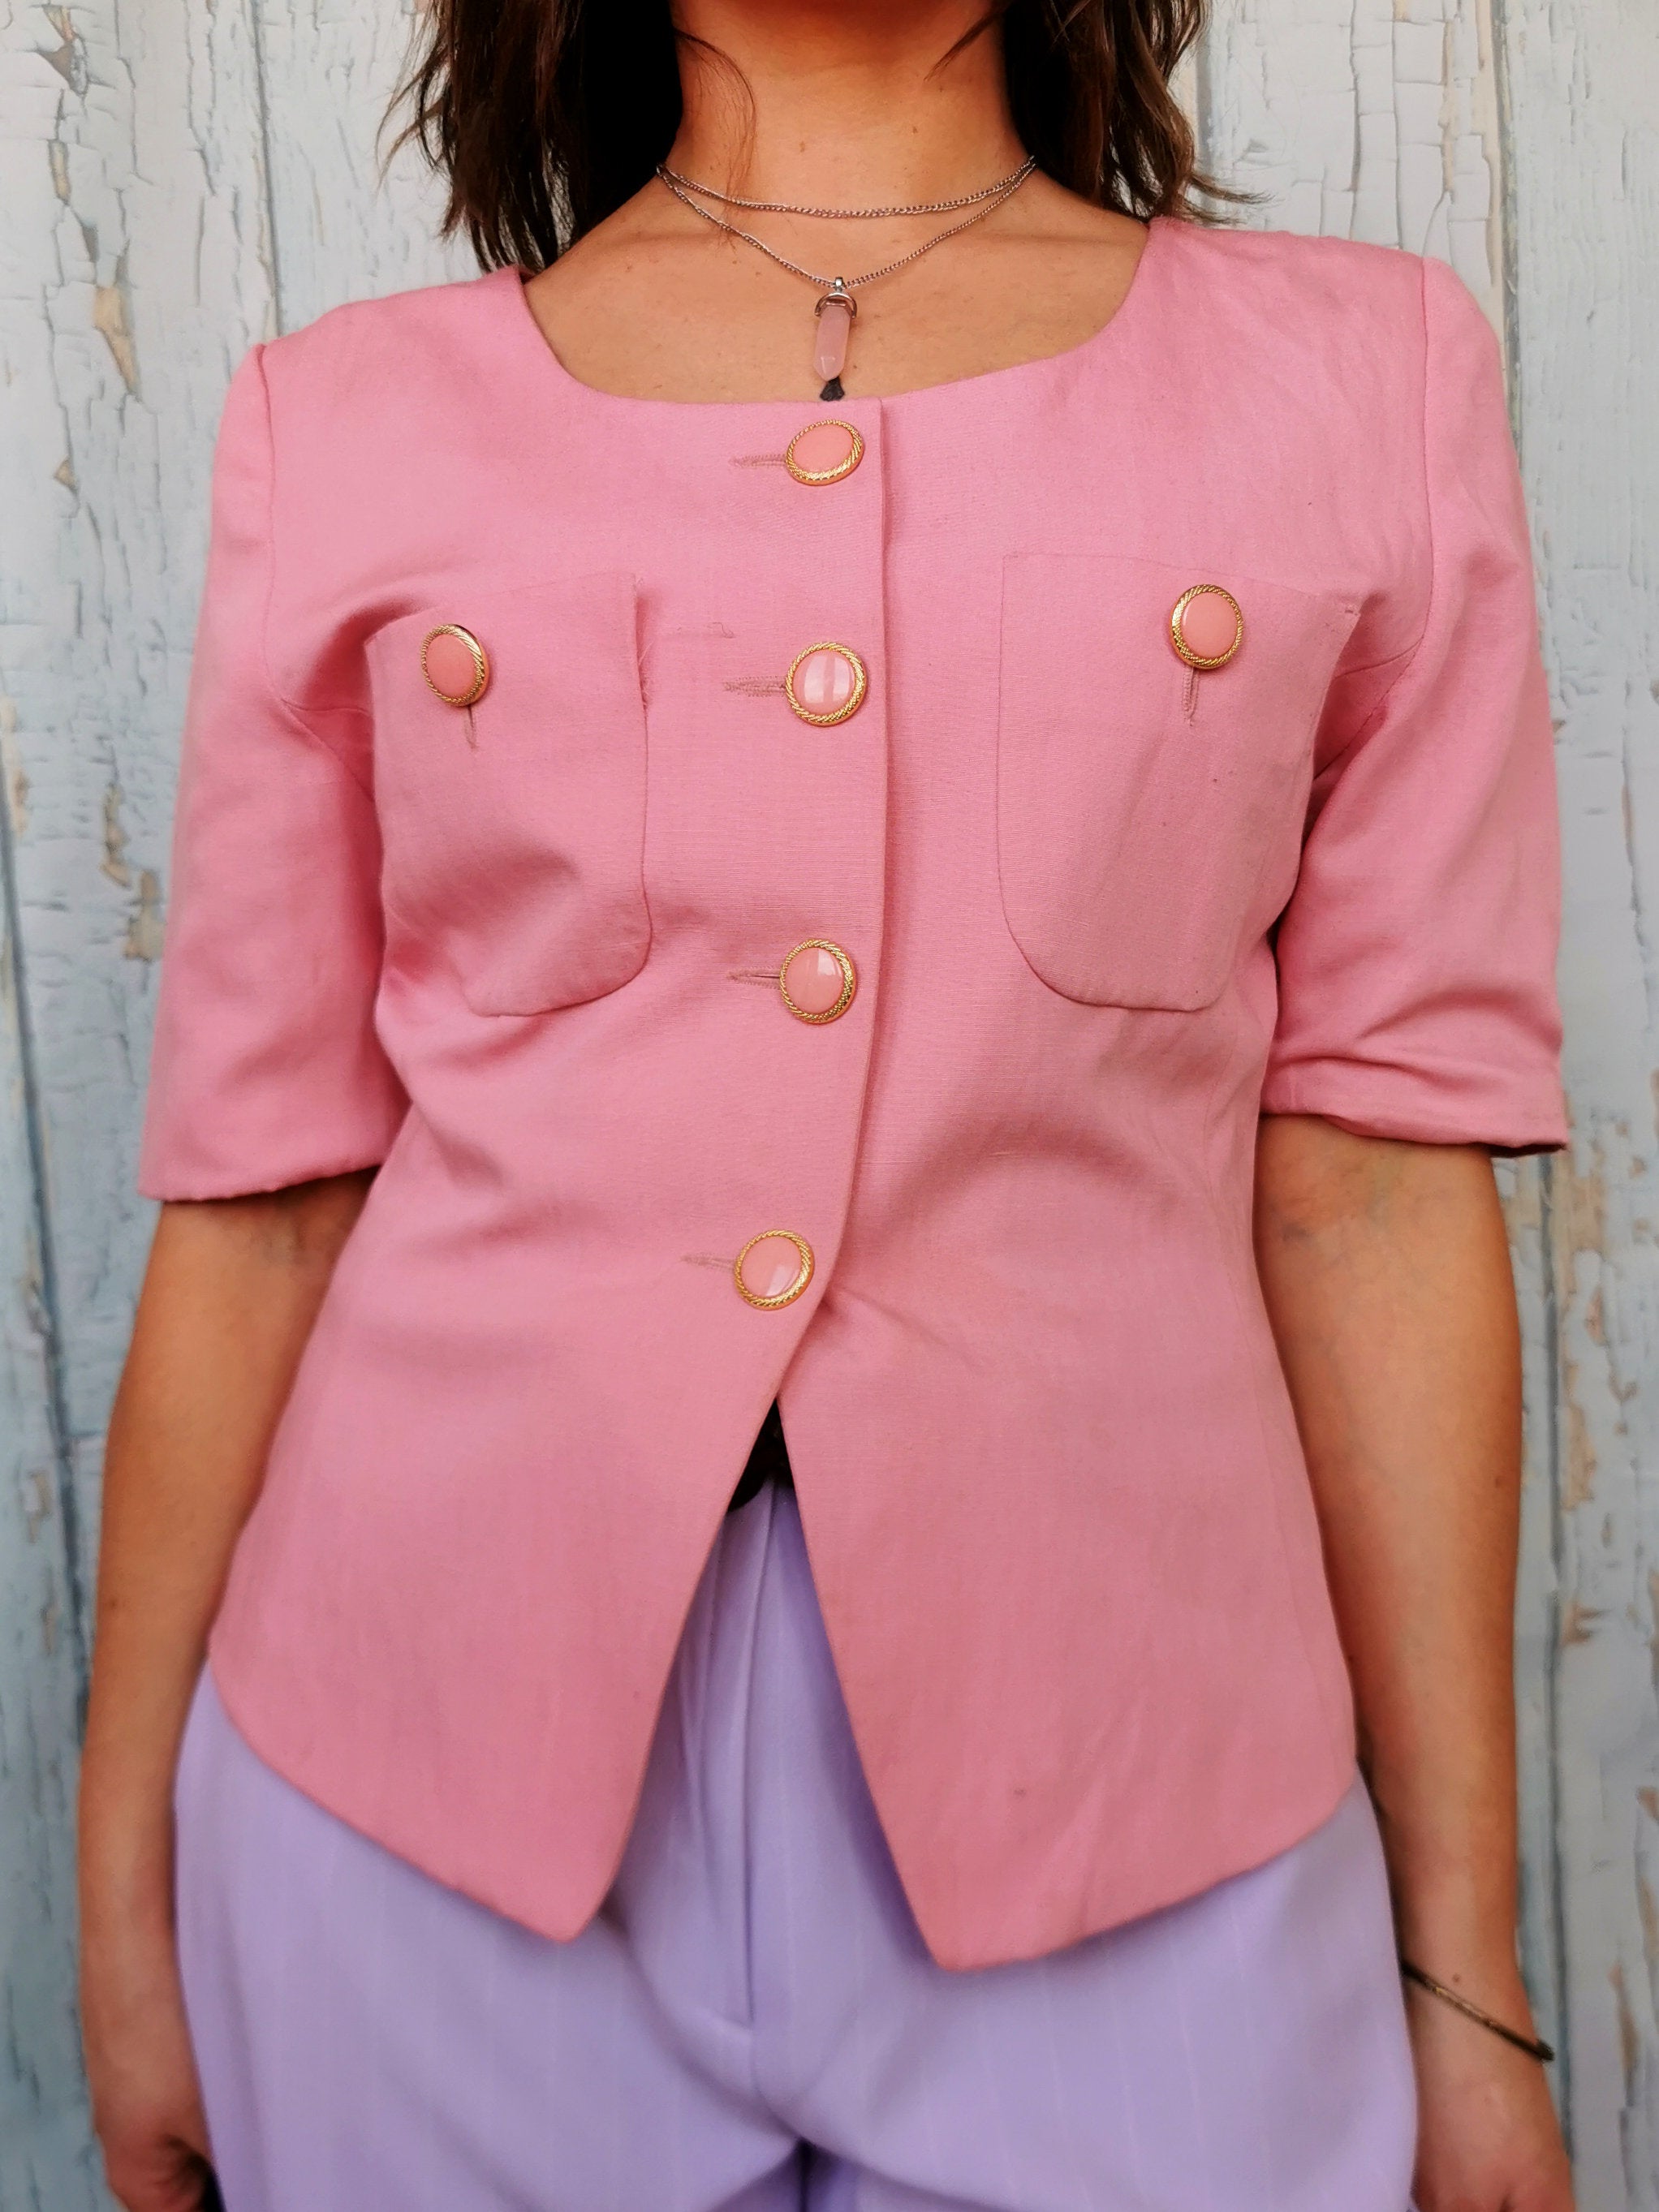 Vintage 80s smart casual minimalist pastel pink blouse top